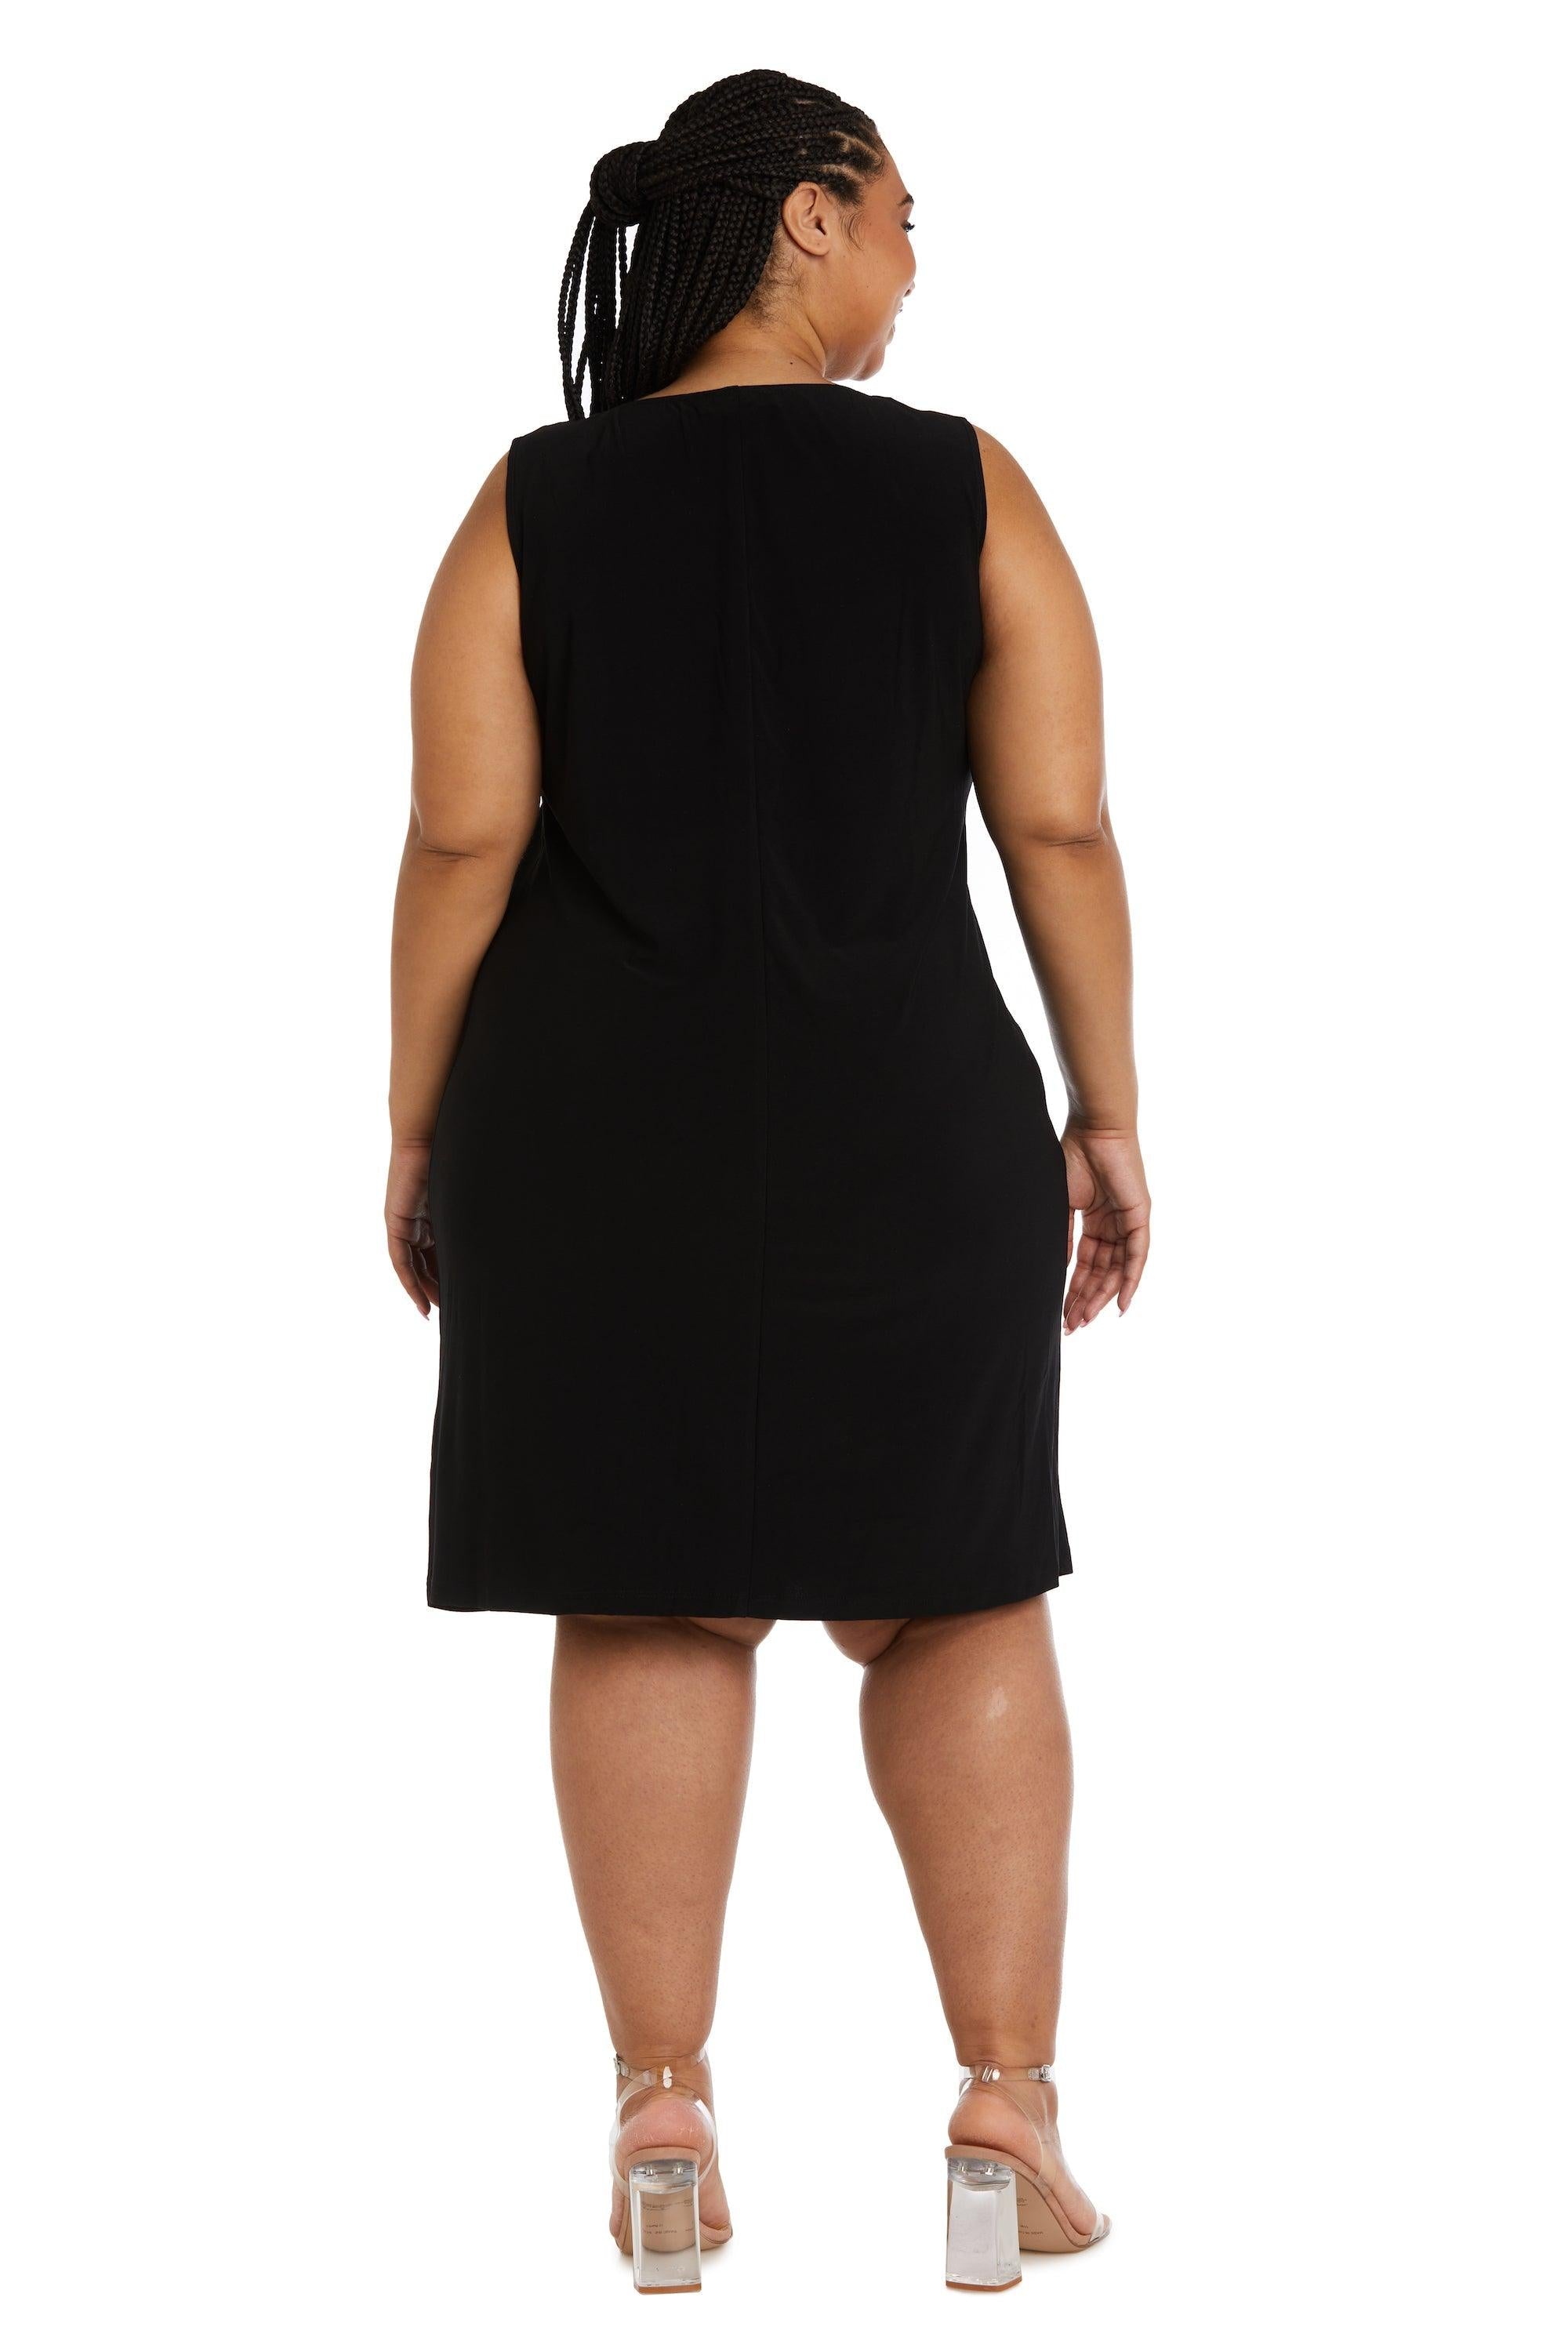 R&M Richards Plus Size Printed Jacket Dress 9203W - The Dress Outlet